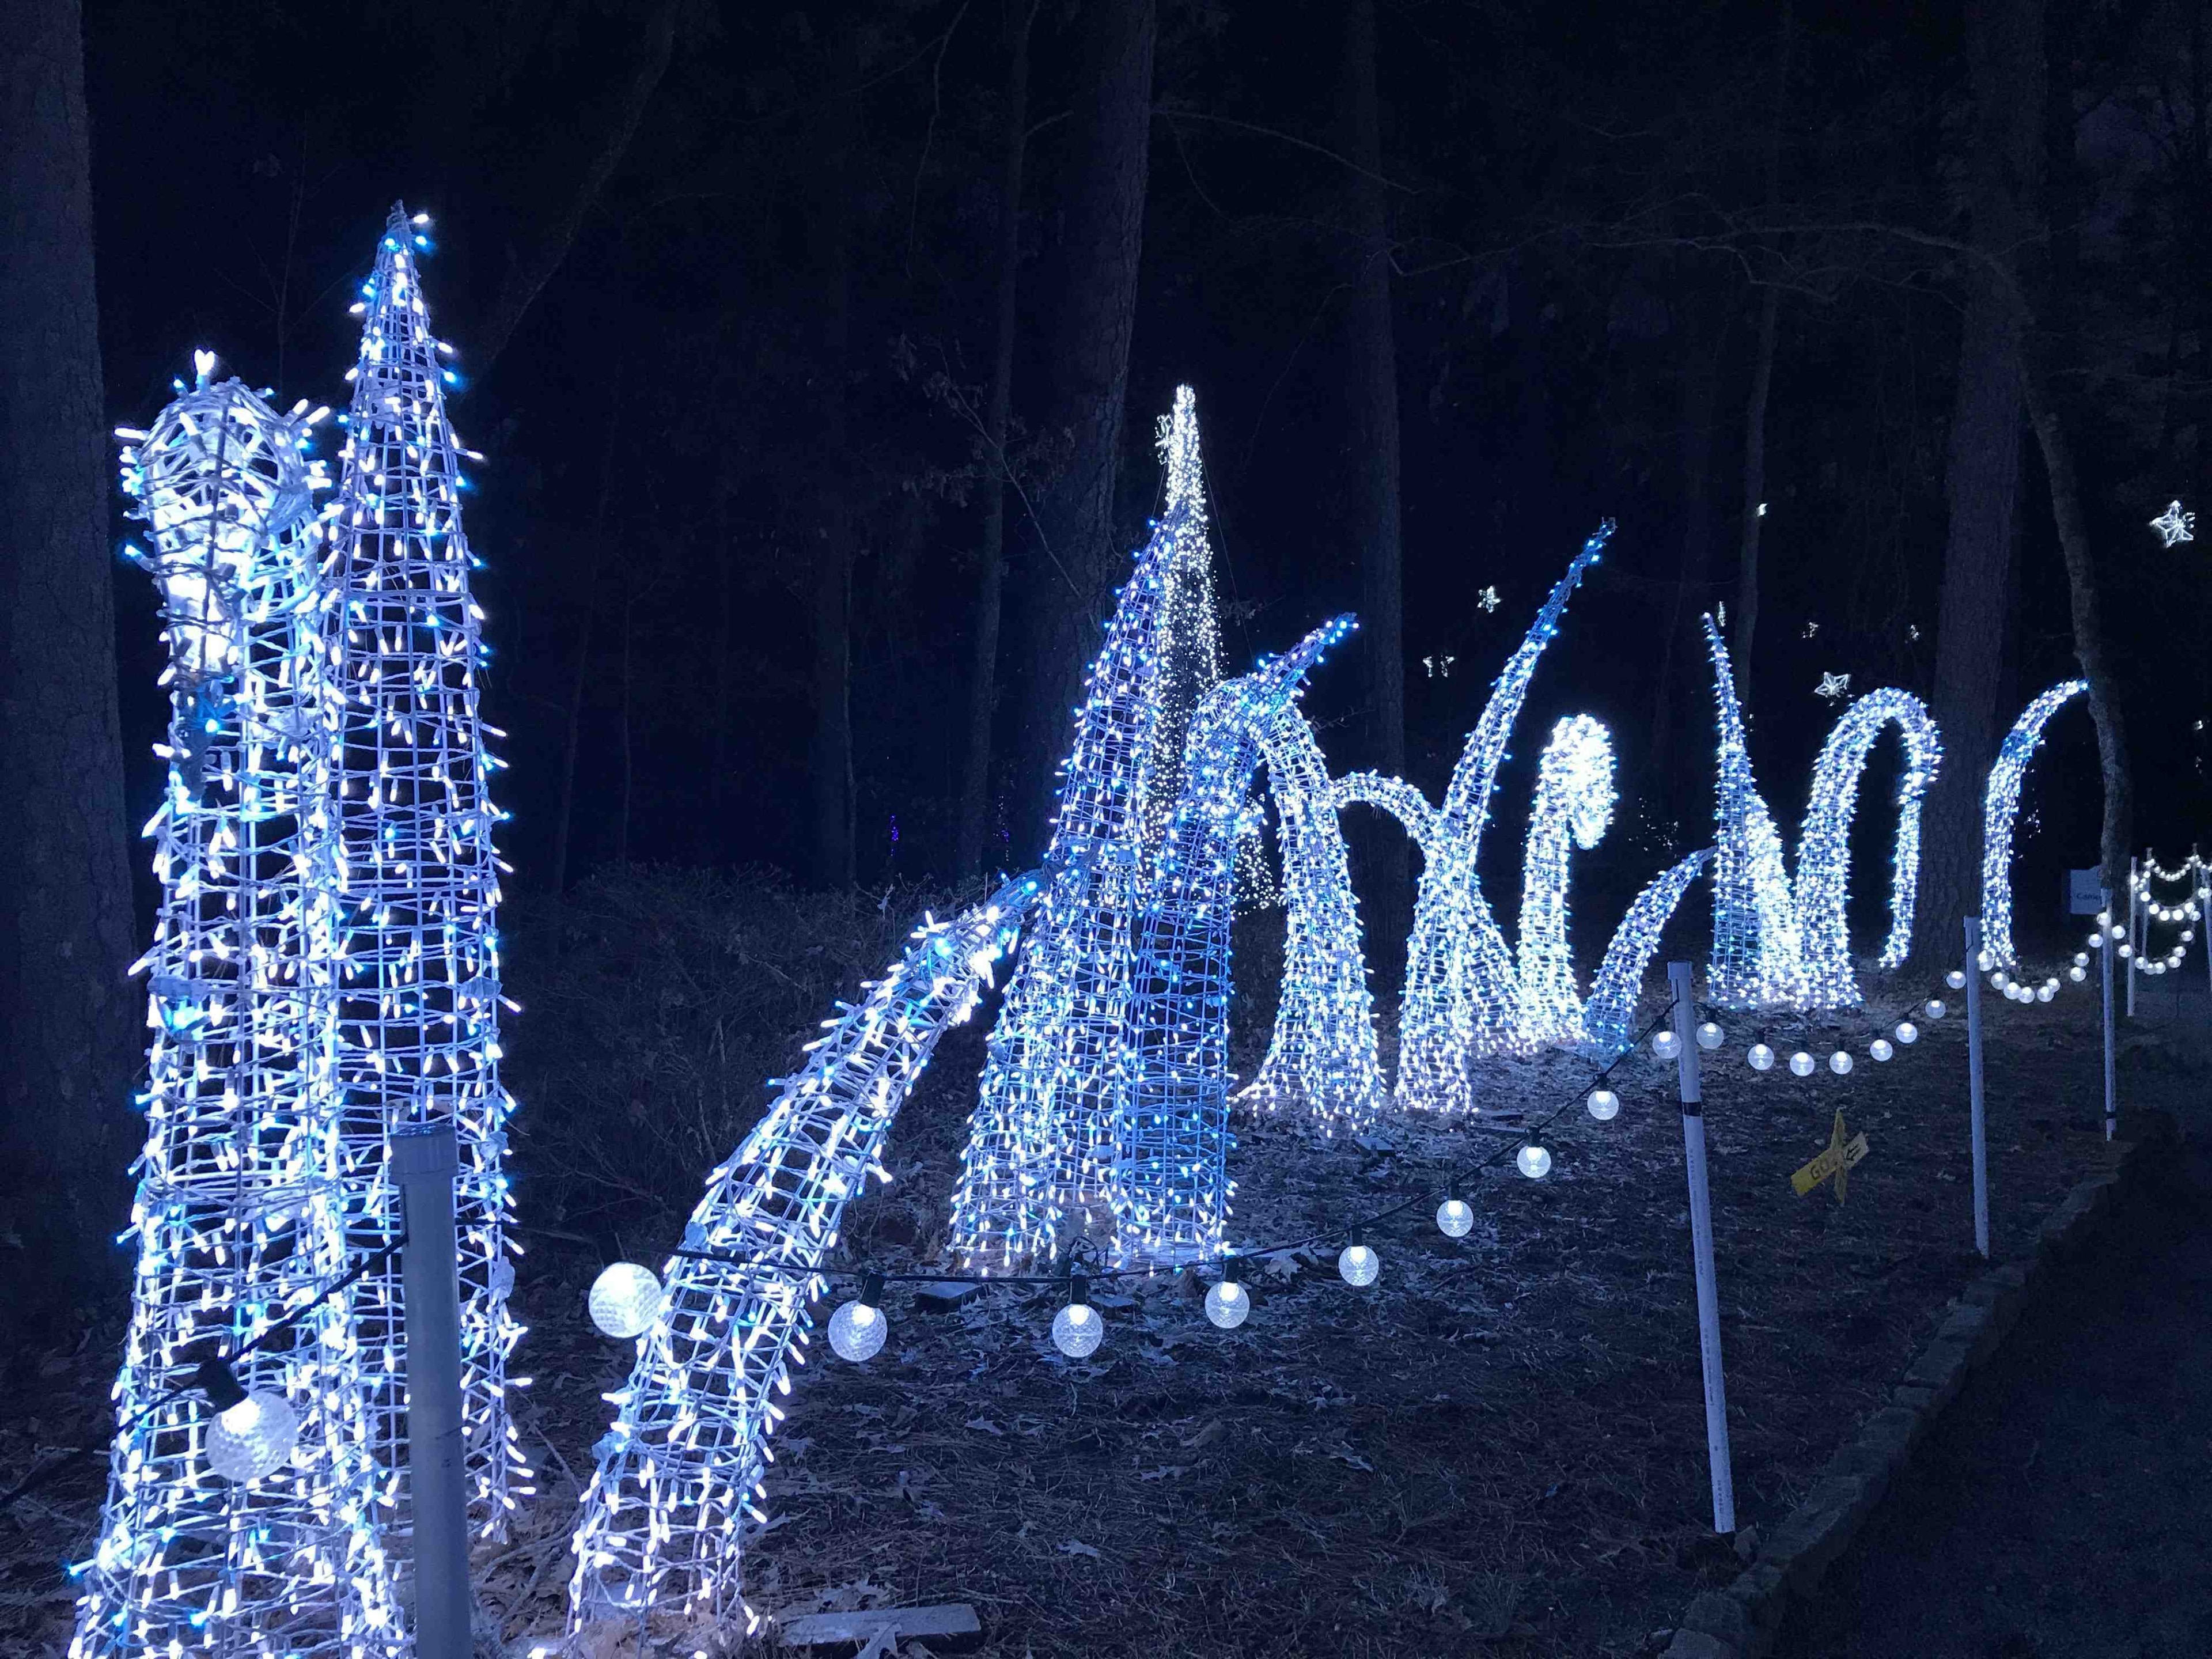 Beautiful light display at Garvan Woodland Gardens holiday lights.
#holidaylights #arkansas #hotsprings #blue